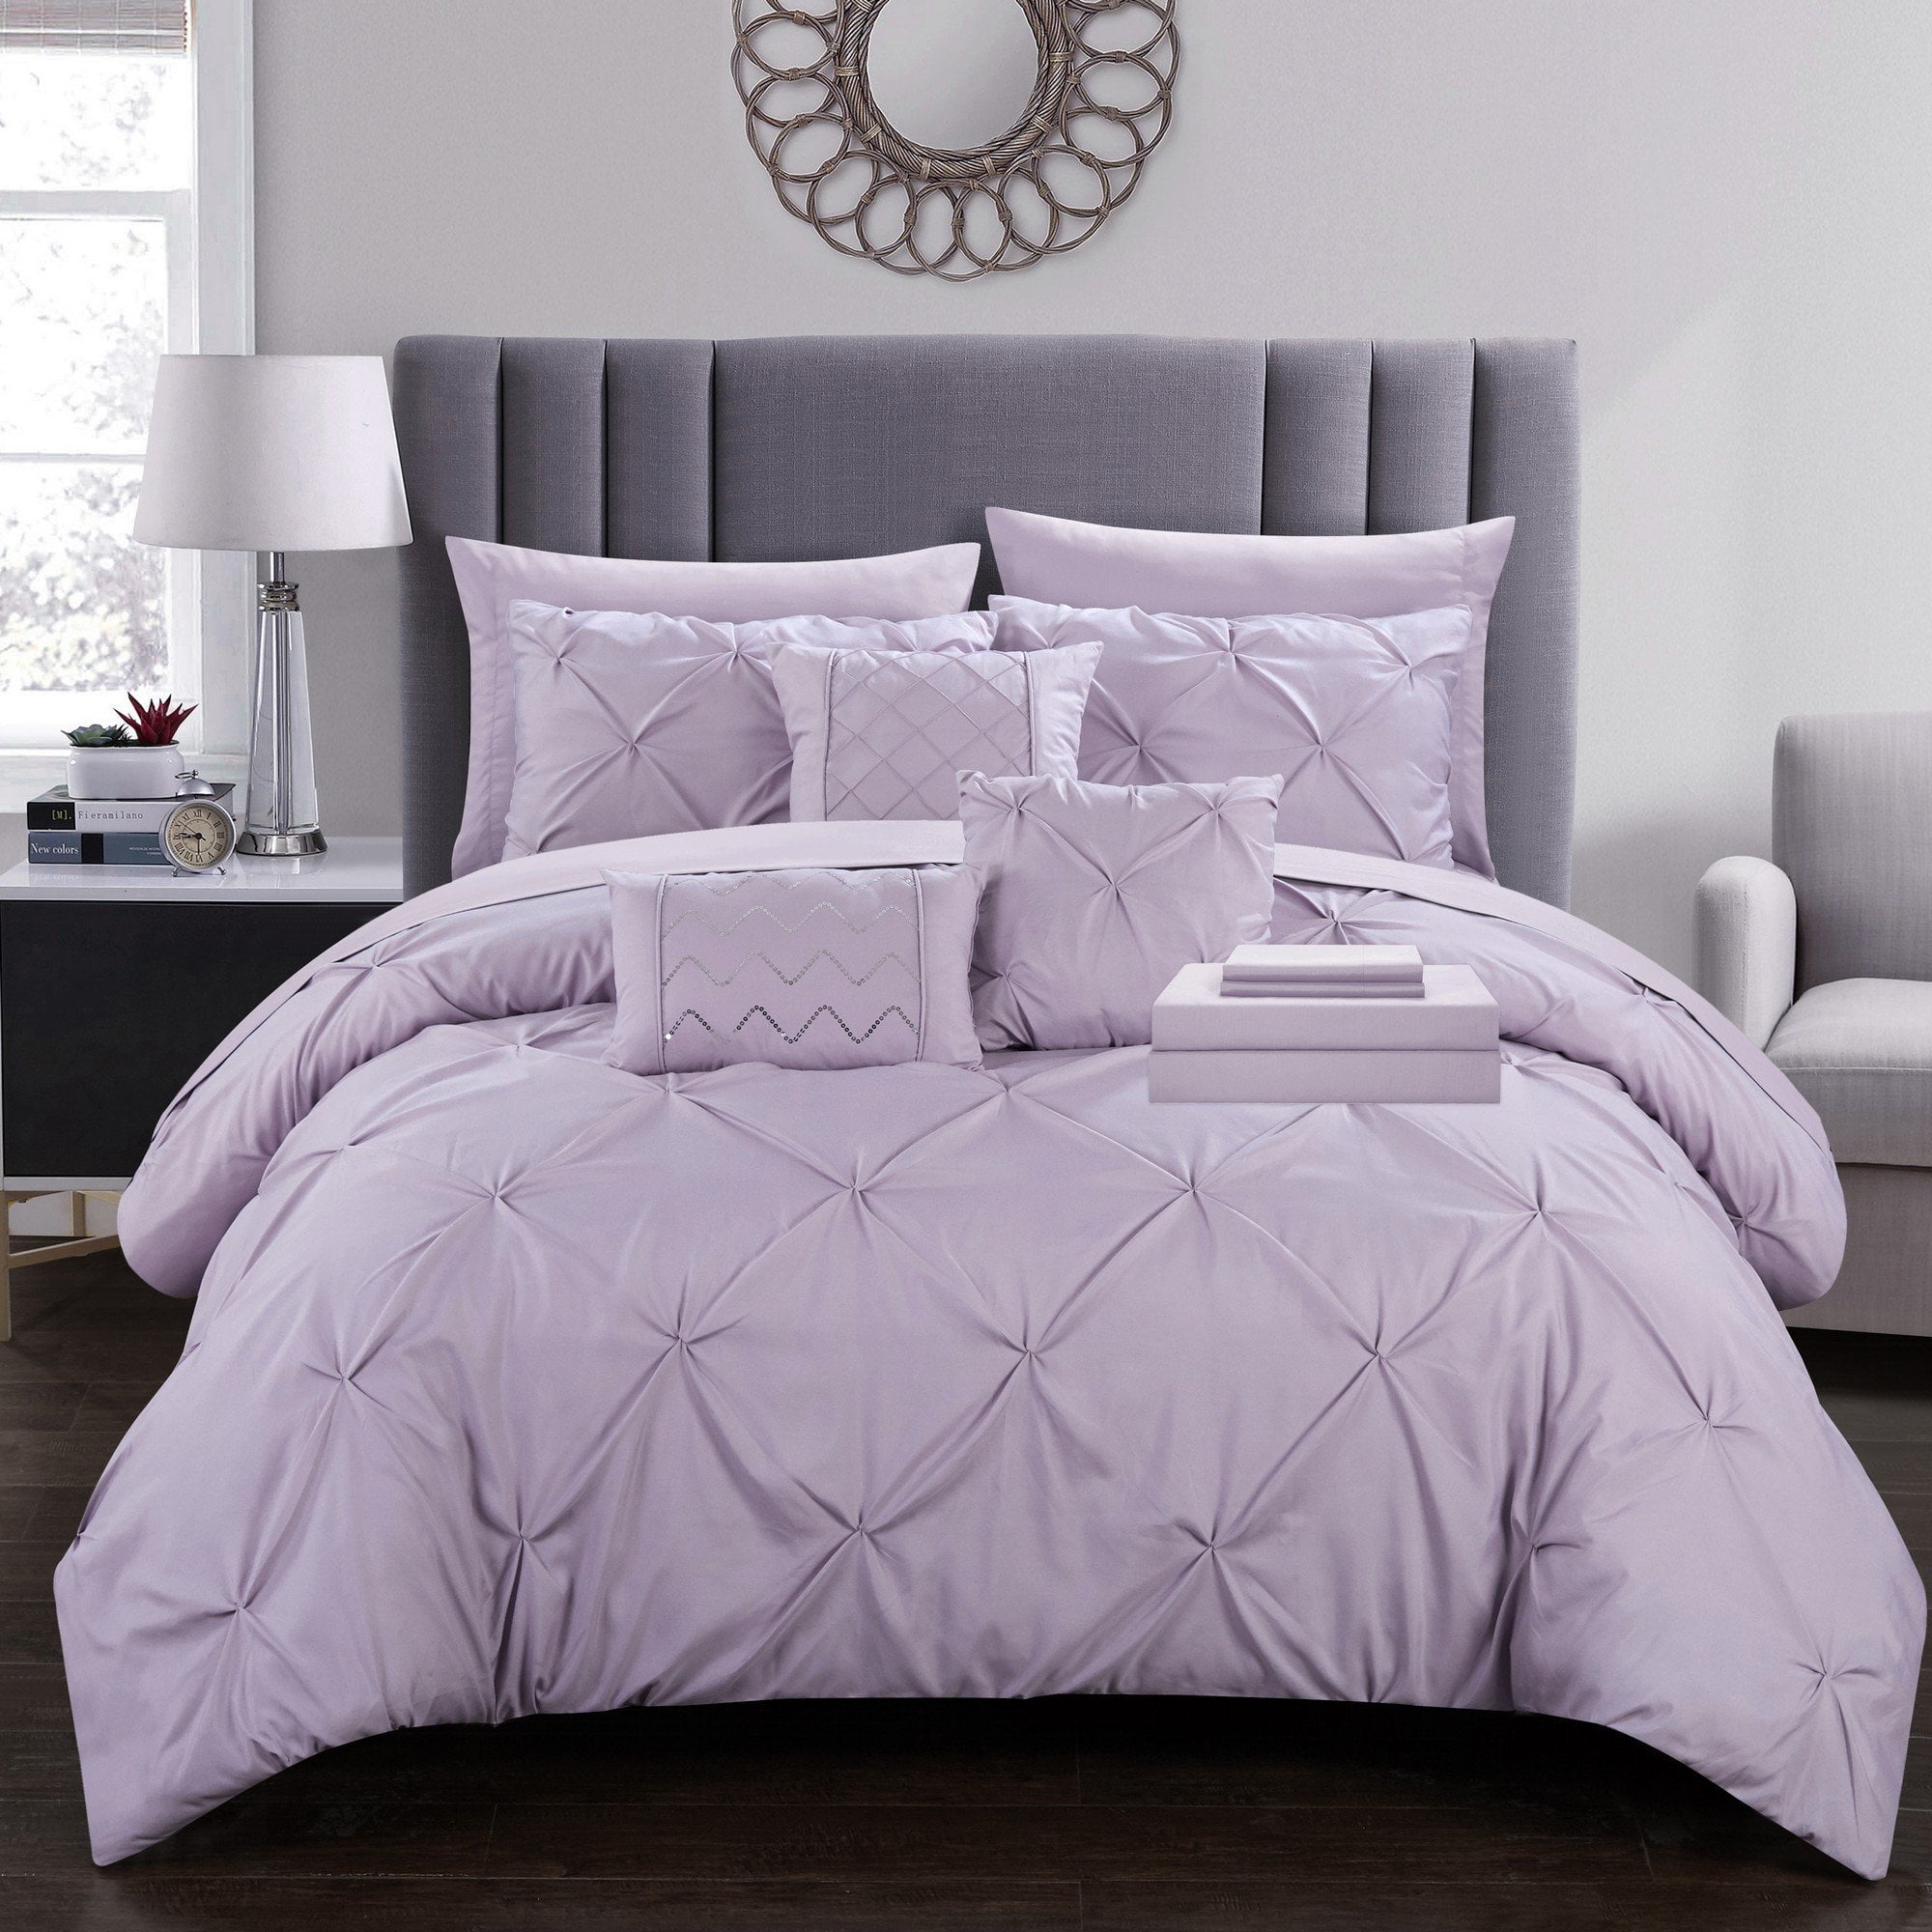 Karras 10 Piece Comforter Bed in a Bag Sheets Decorative Pillows Shams Plum 